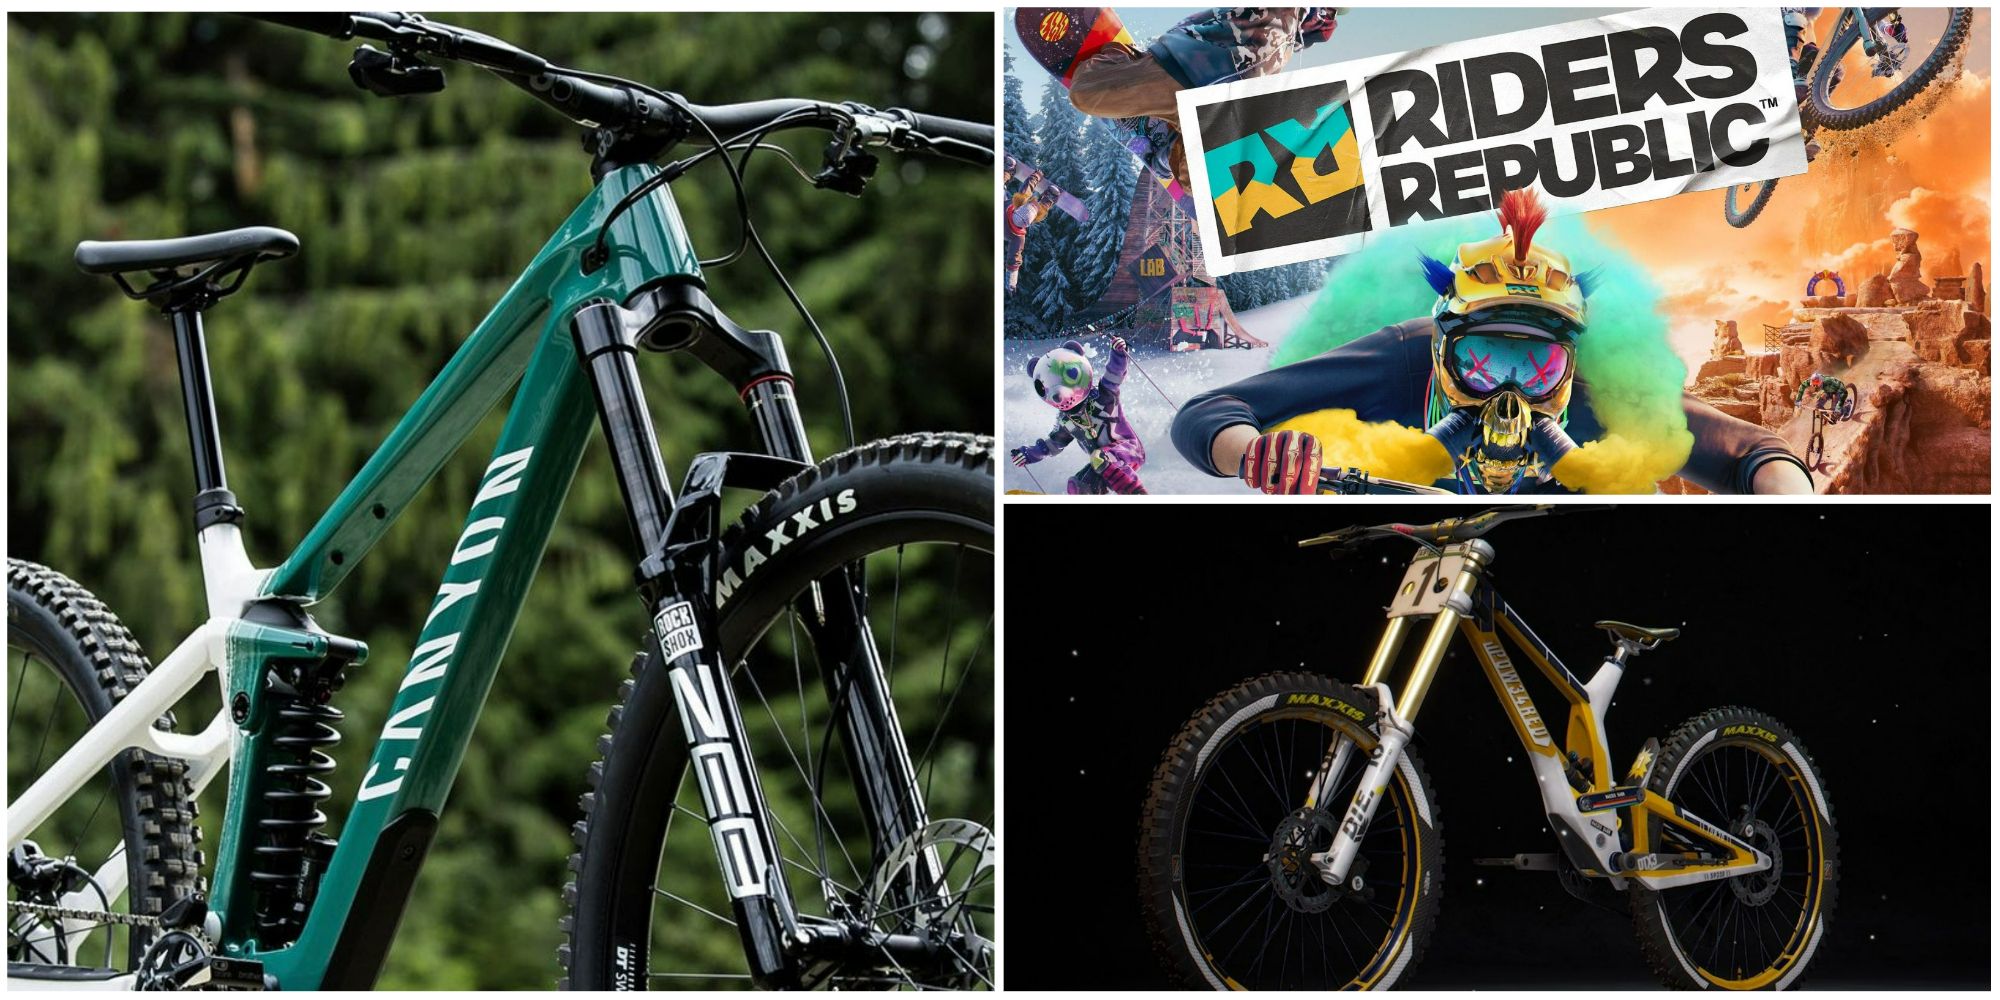 Riders Republic Canyon Strive CF Team 02 Freeride Bike, main art and logo, and RR POW34RED. Downhill Bike 